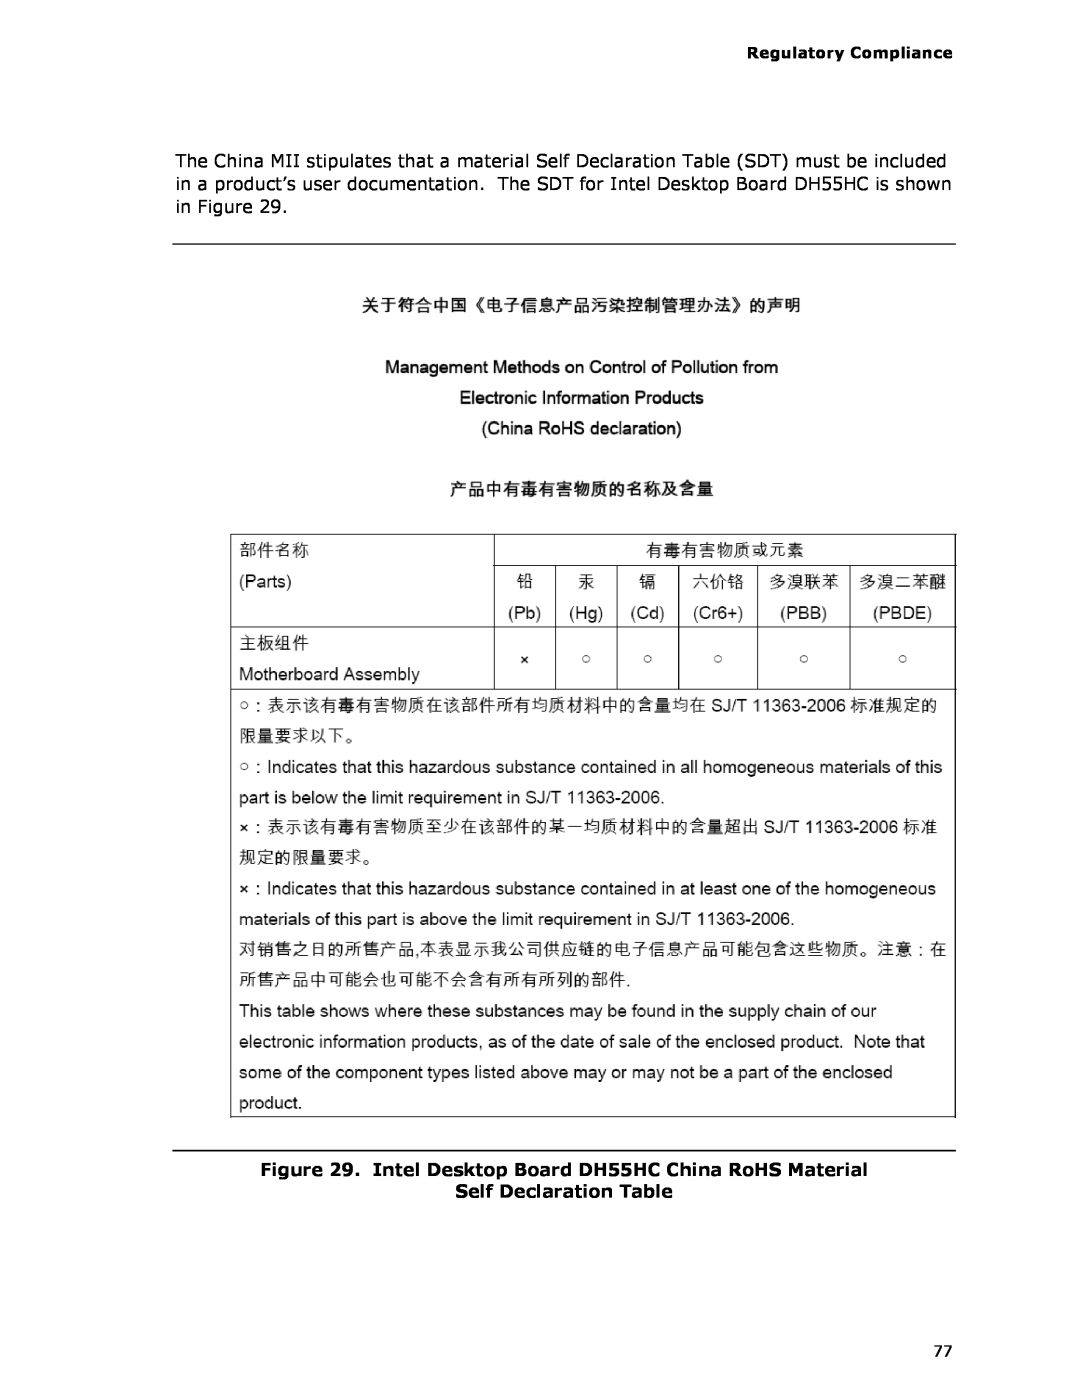 Intel BOXDH55HC manual Intel Desktop Board DH55HC China RoHS Material, Self Declaration Table 